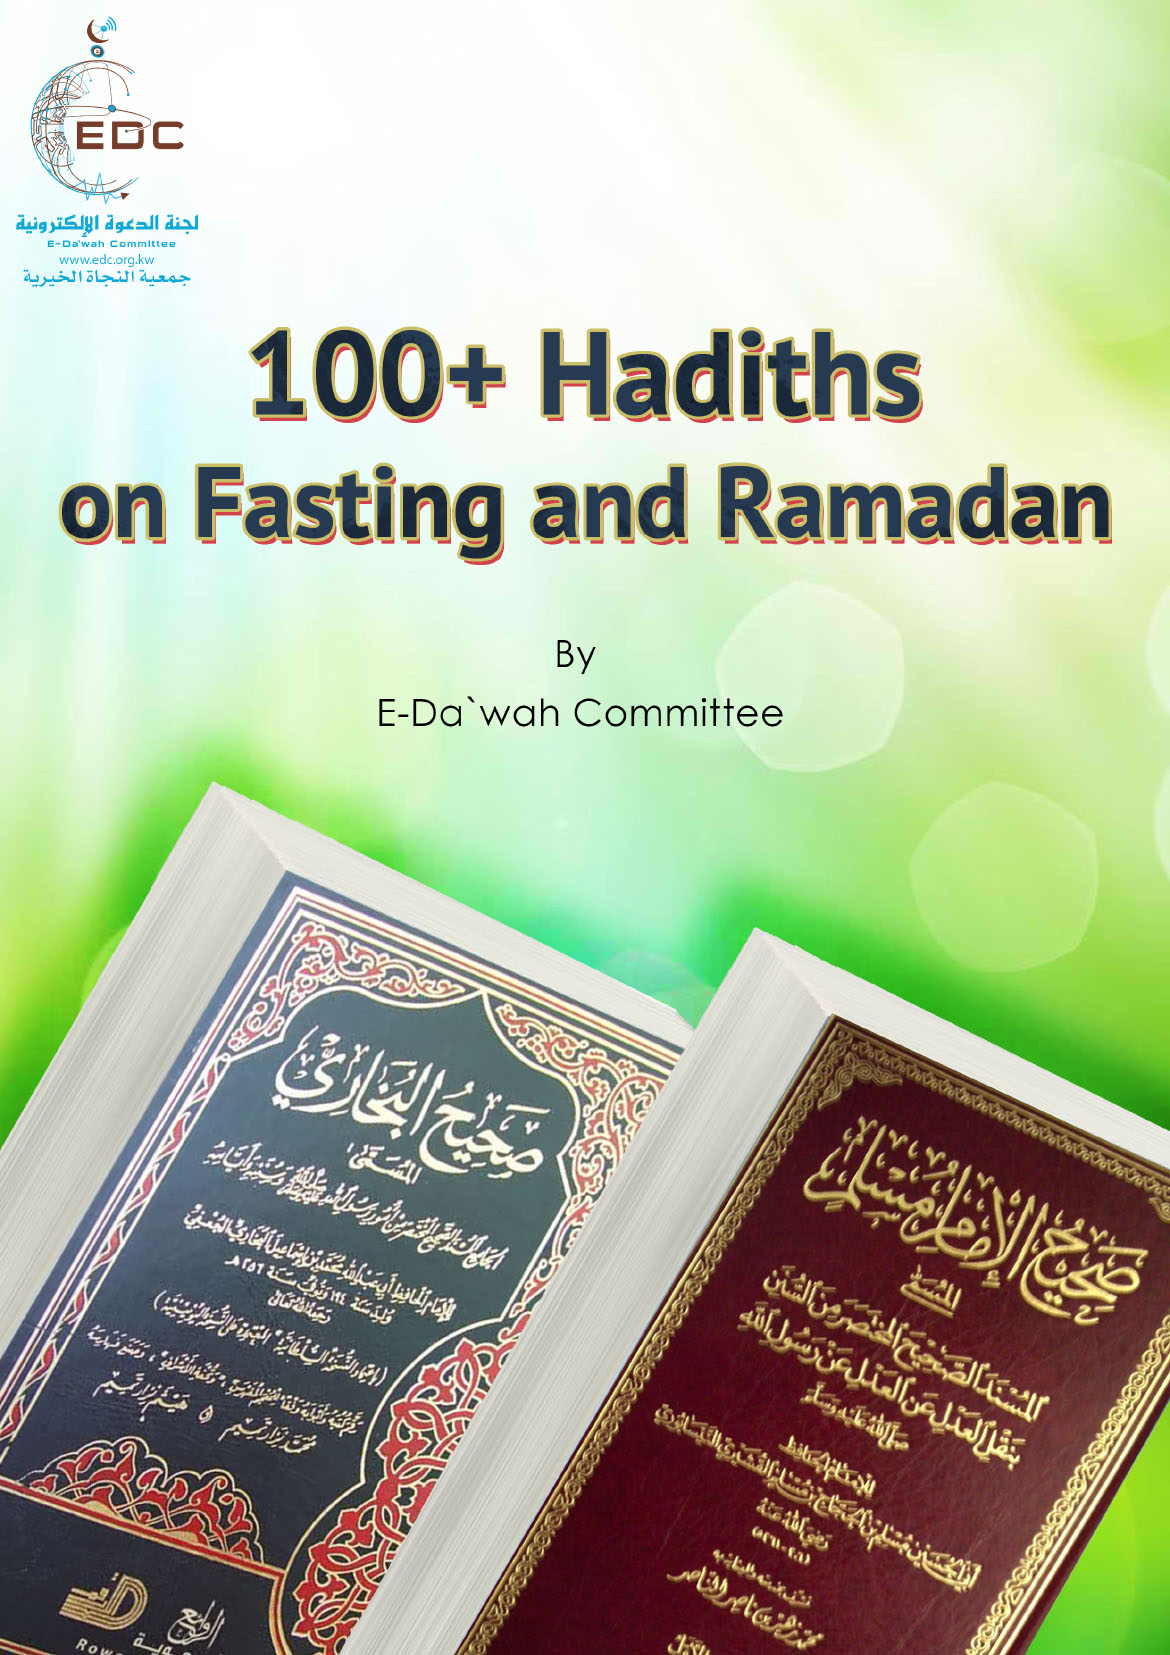 100+_Hadith_on_Fasting_and_Ramadan-1